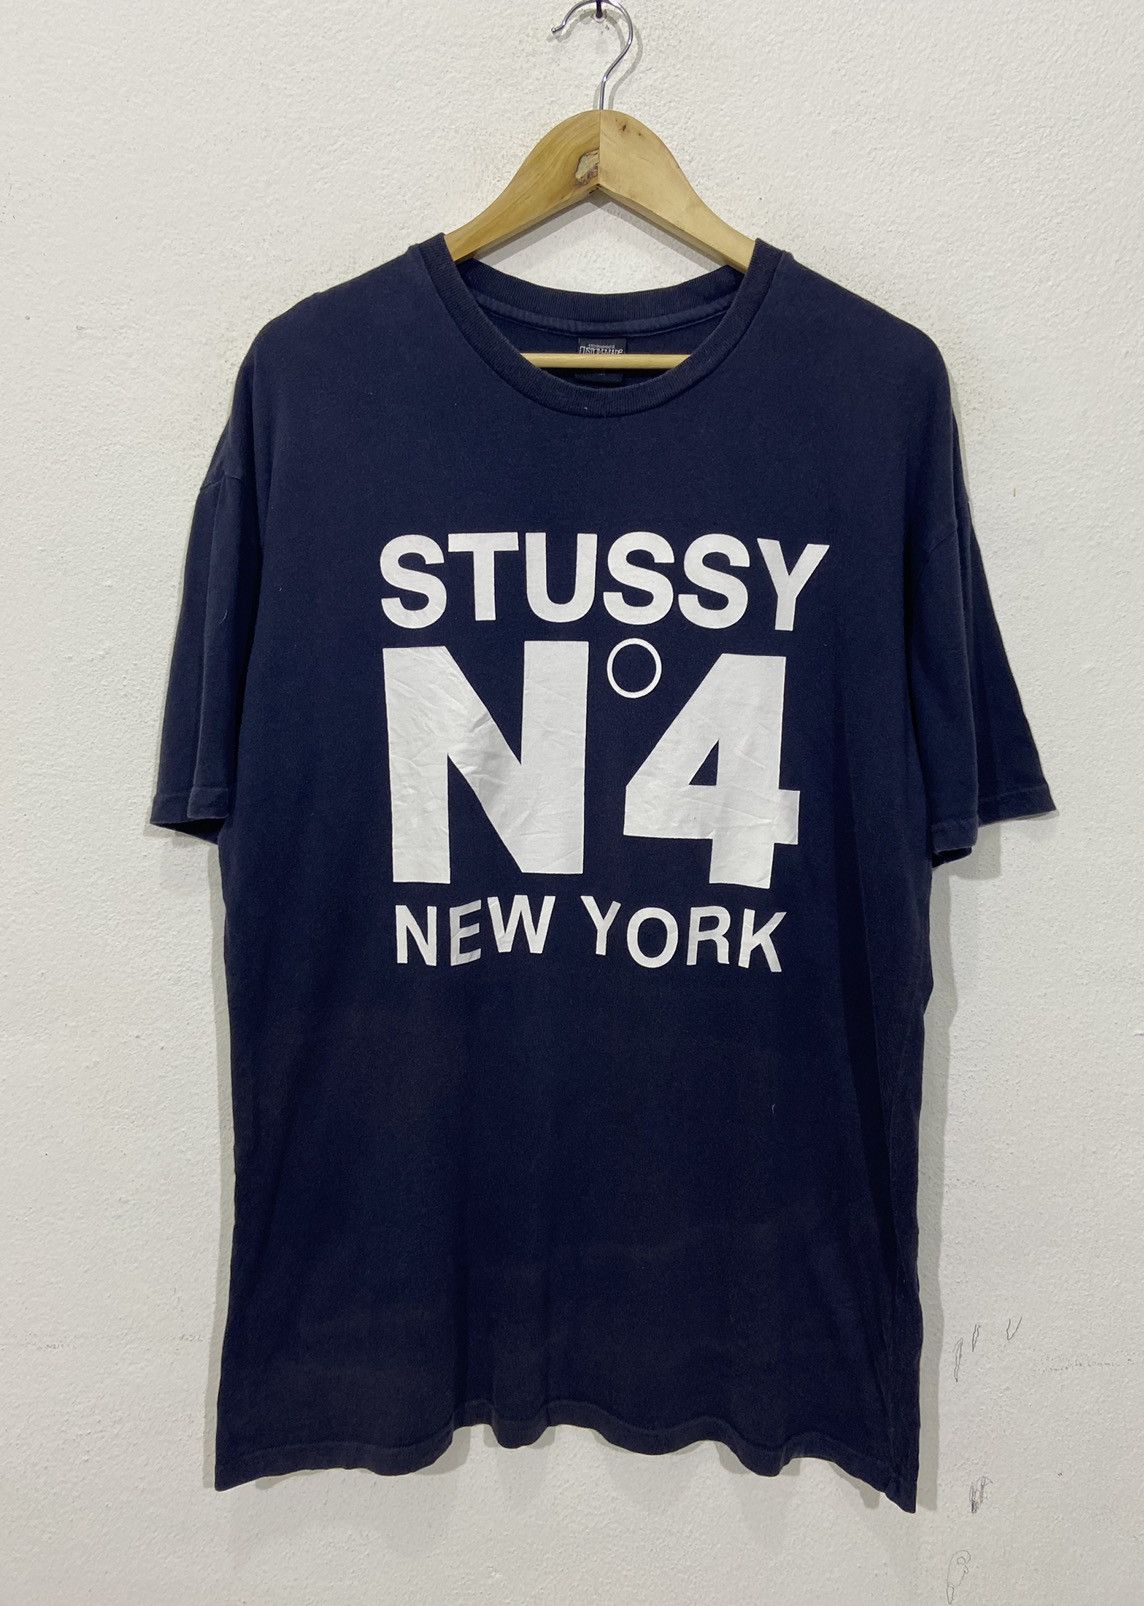 Stussy Stussy Custom Made New York Tshirt Size US M / EU 48-50 / 2 - 1 Preview